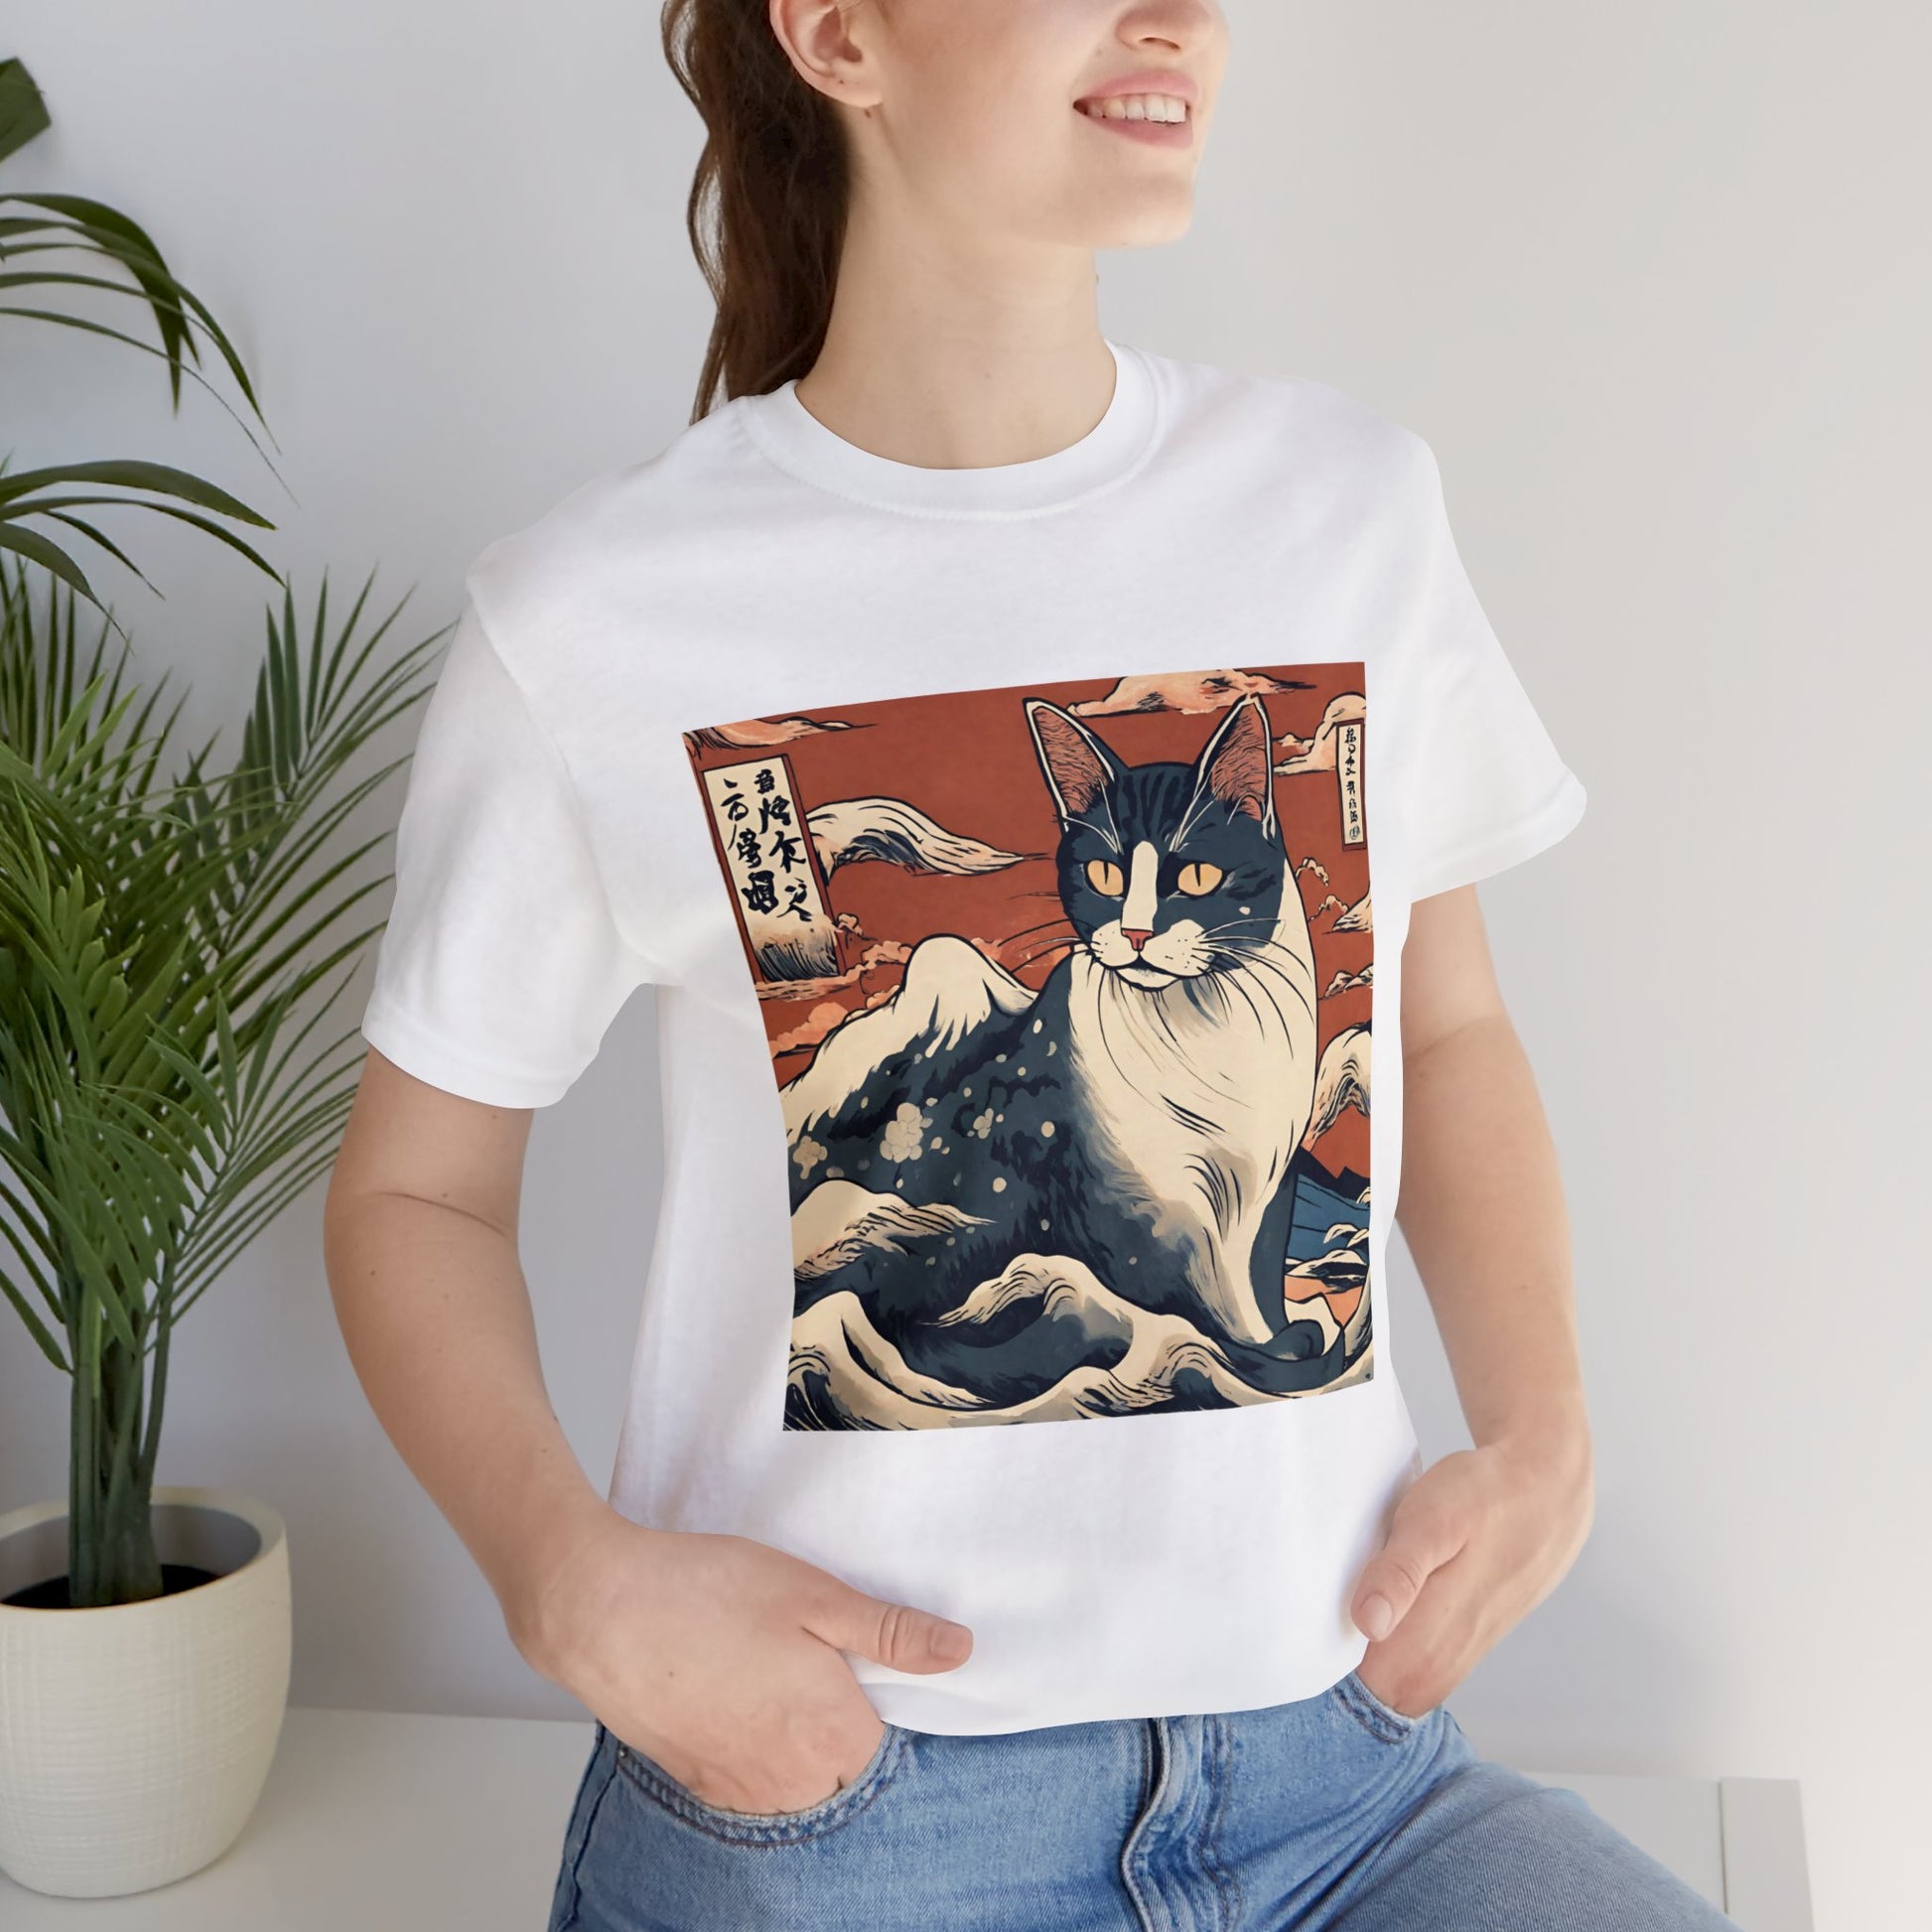 Cat Ukiyo-e style art T-shirt, cat japanese aesthetic Unisex Short Sleeve Tee, cat japan-themed art print shirt, The Great Wave tee shirt